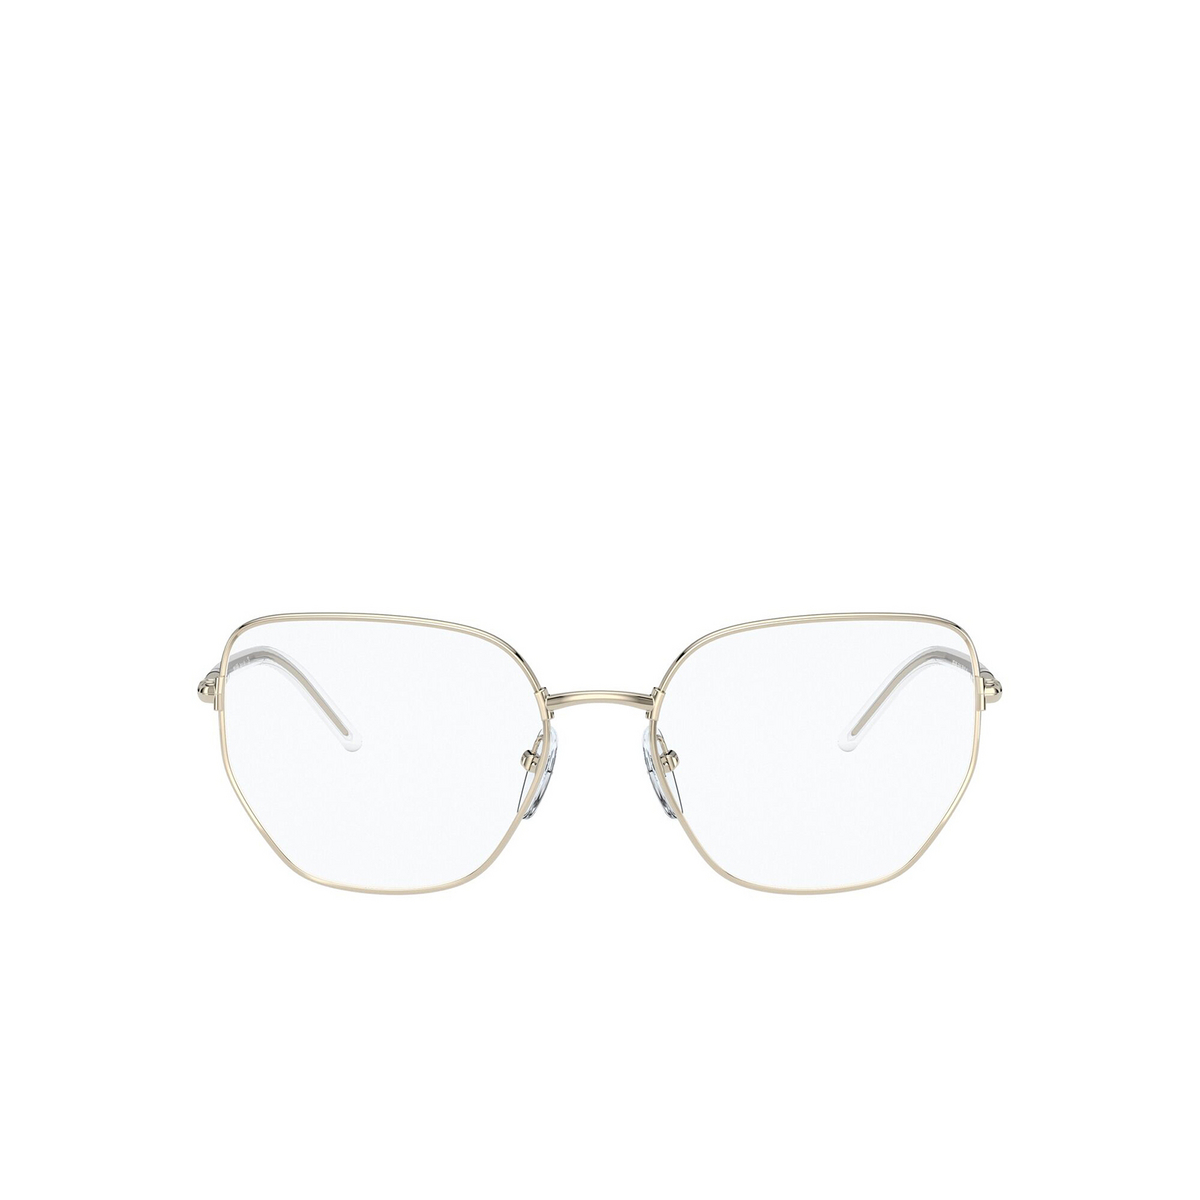 Prada® Irregular Eyeglasses: PR 60WV color Pale Gold ZVN1O1 - front view.